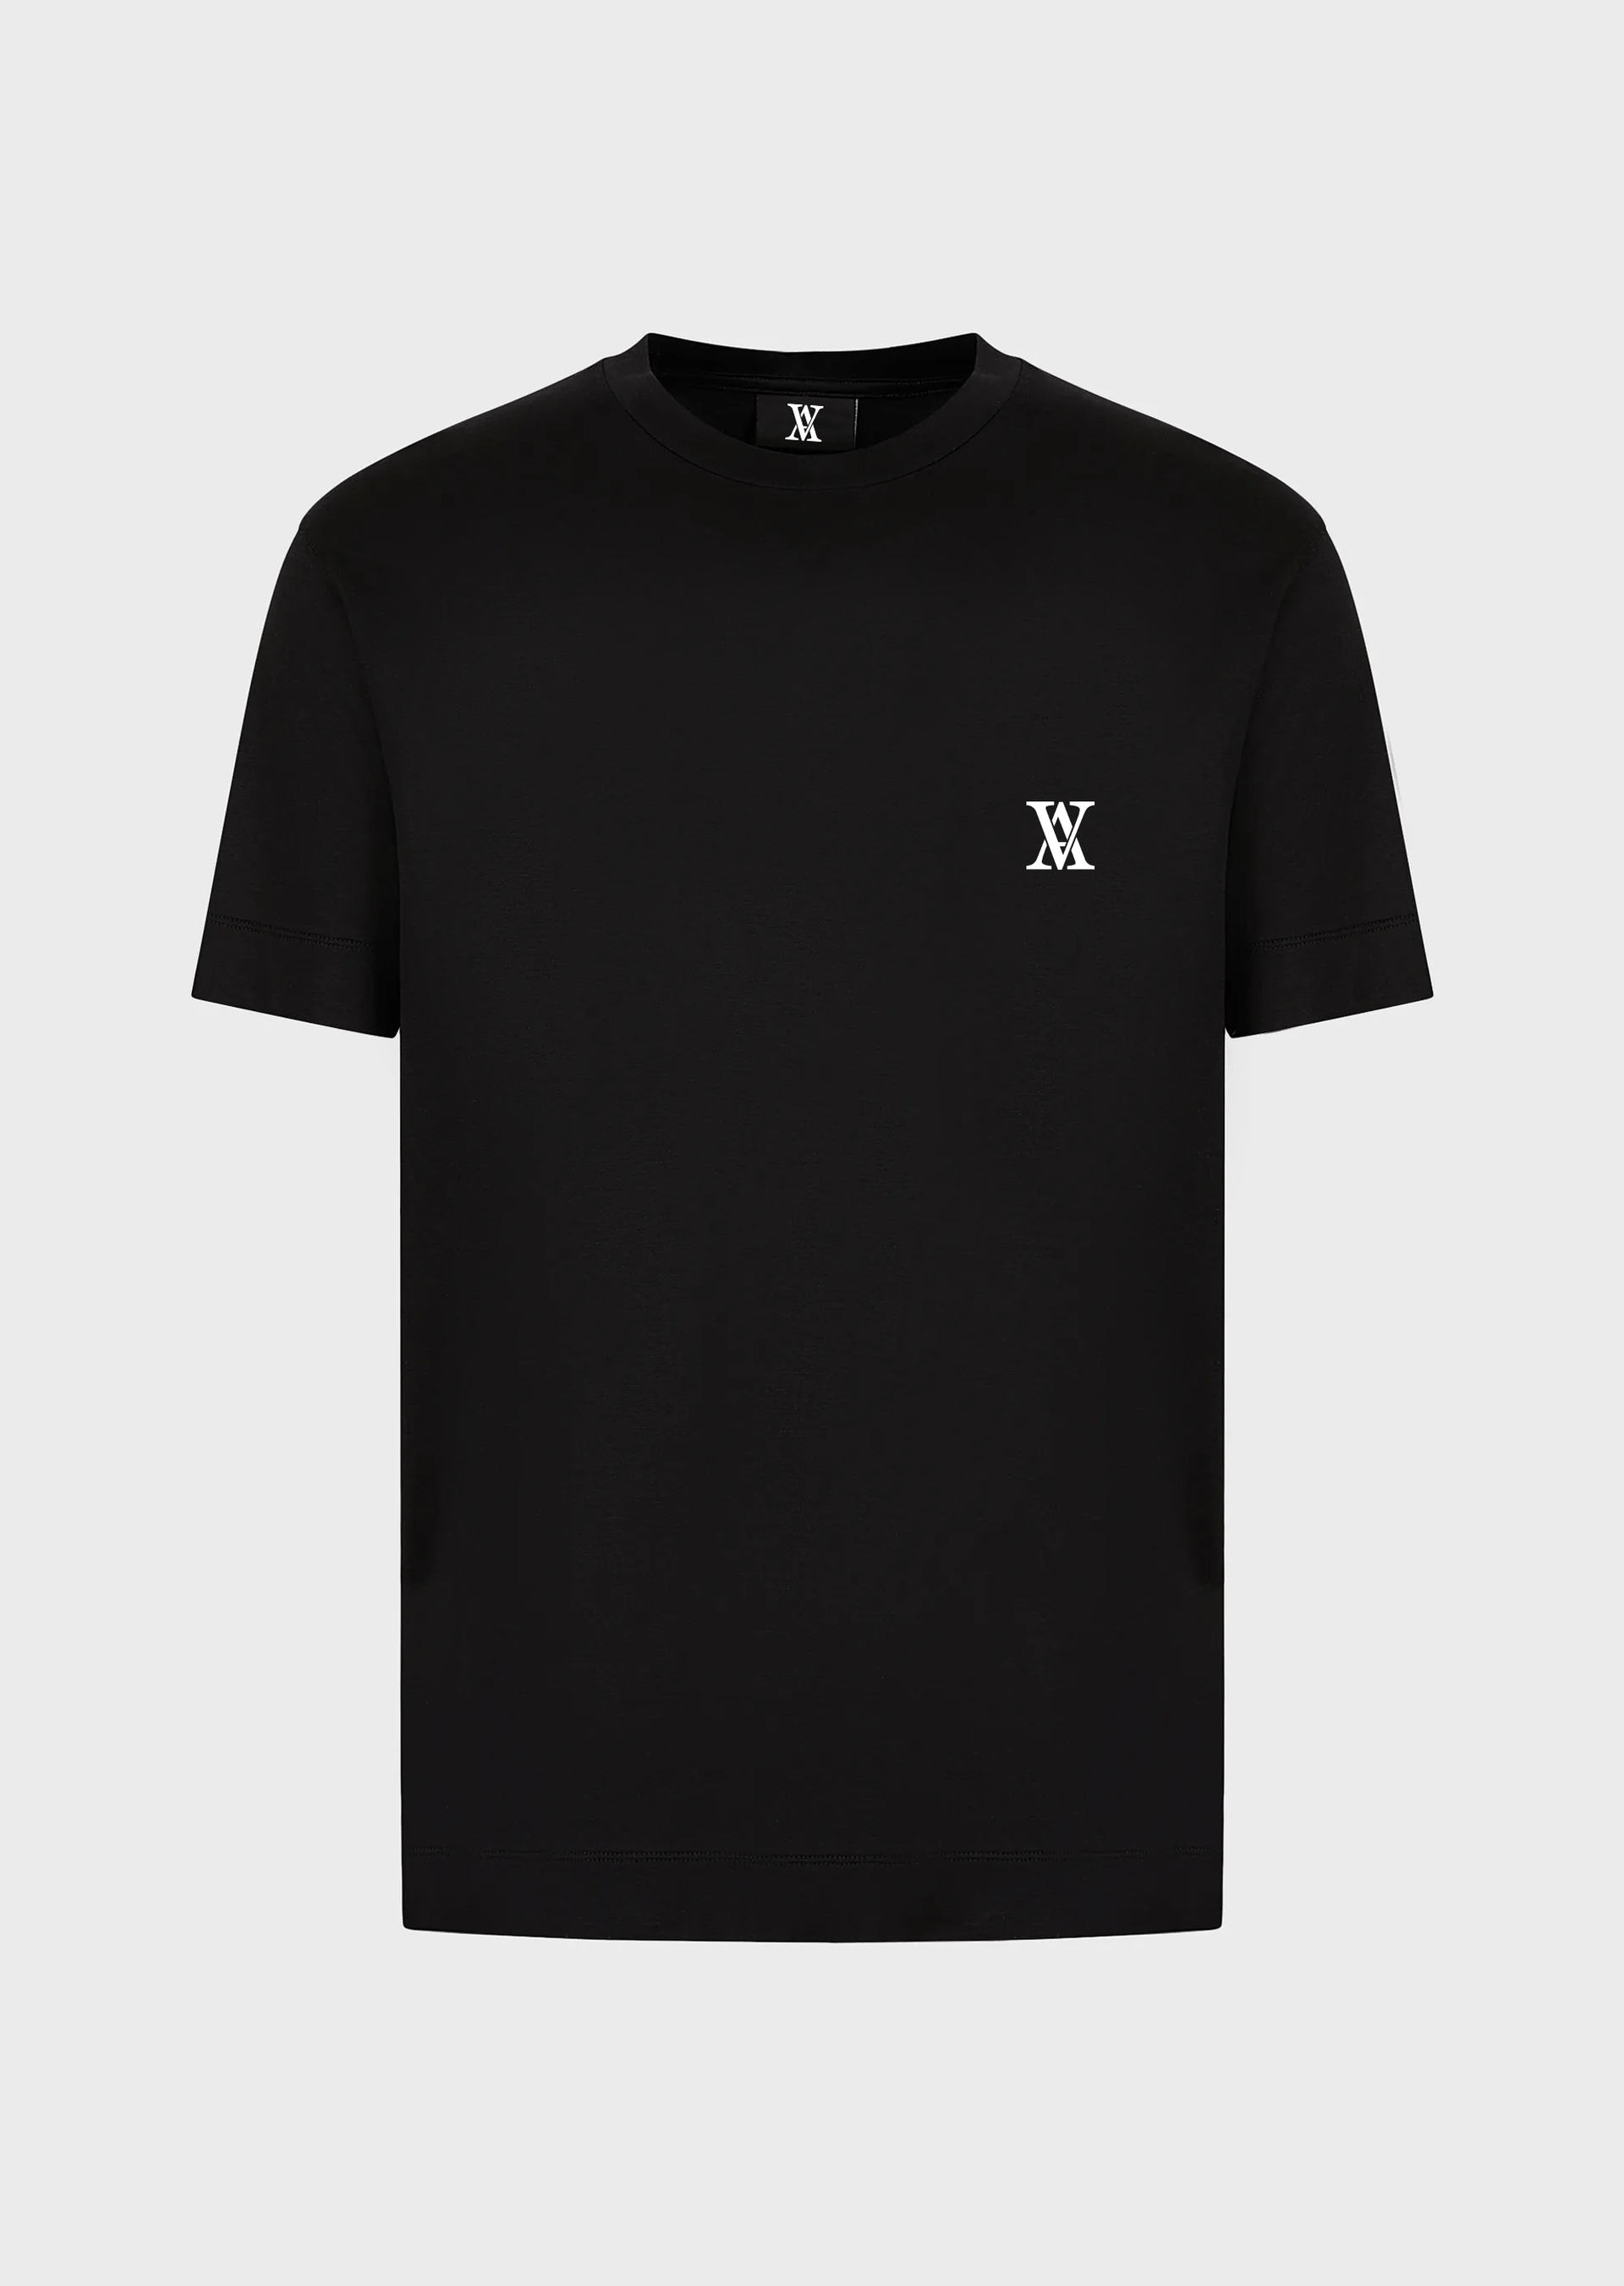 T-Shirt – The Apparel Virtus Store Virtus